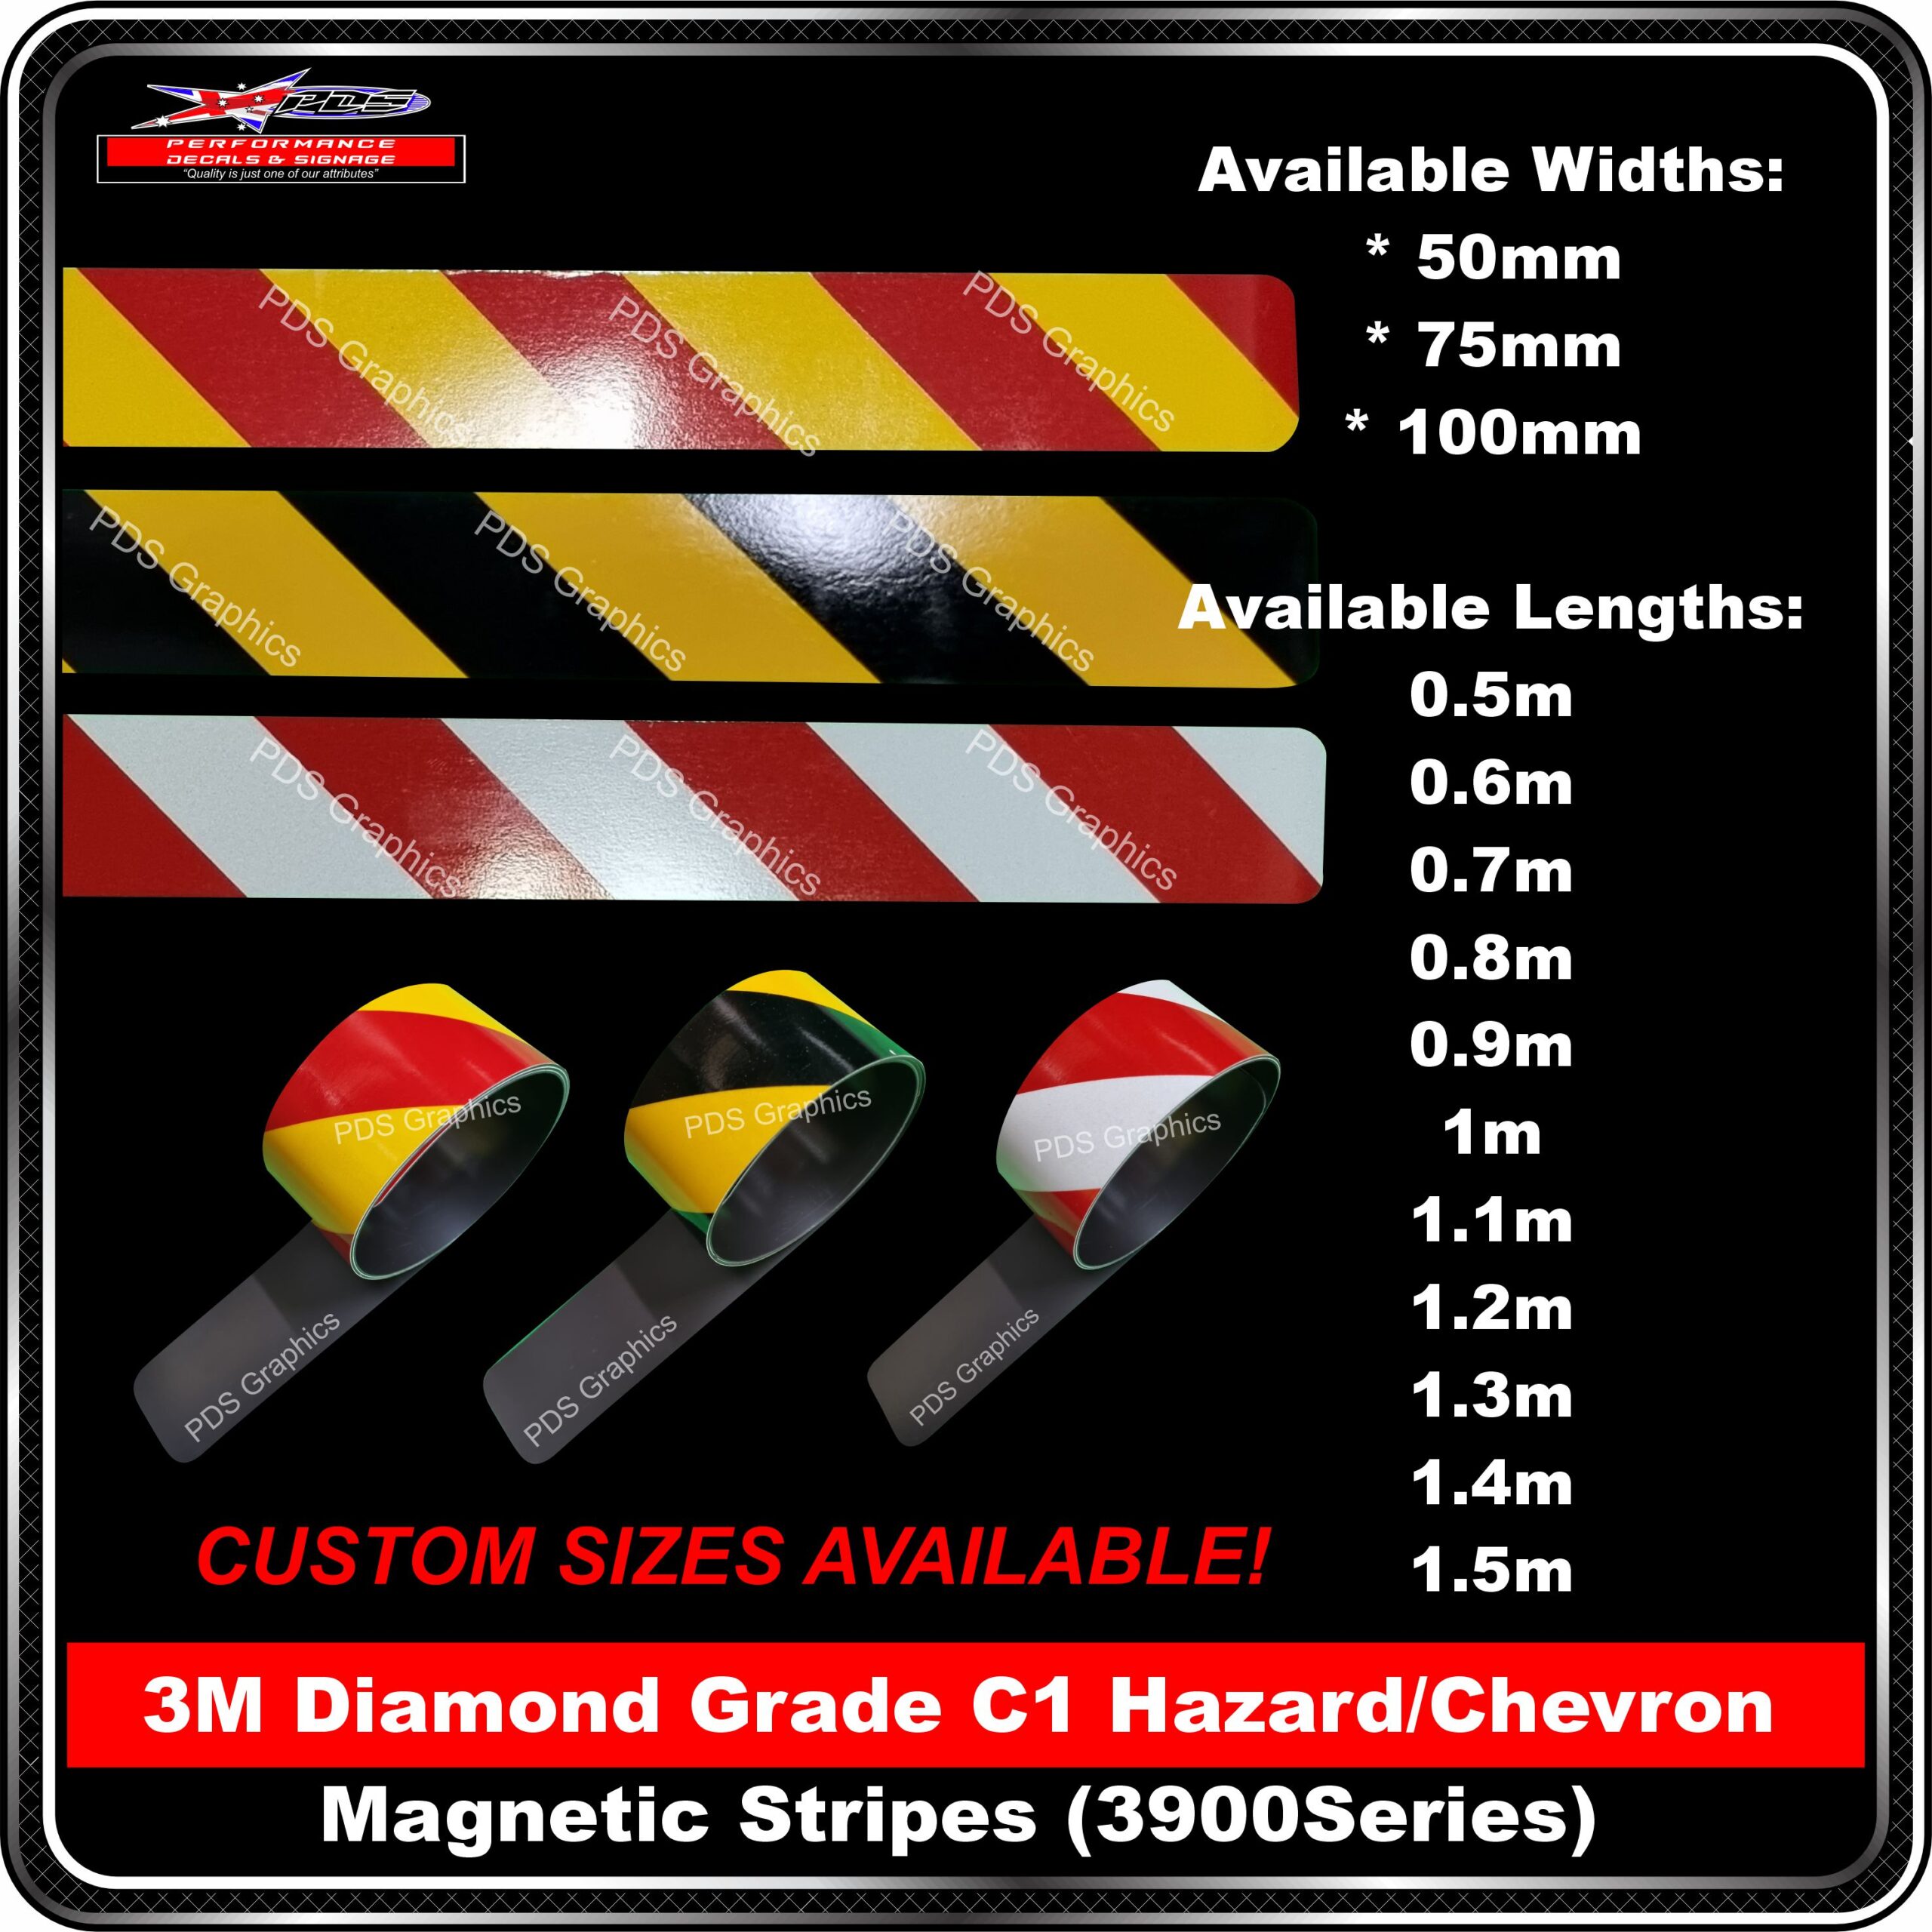 3M Diamond Grade C2 Hazard/Chevron Magnetic Stripes (3200Series)